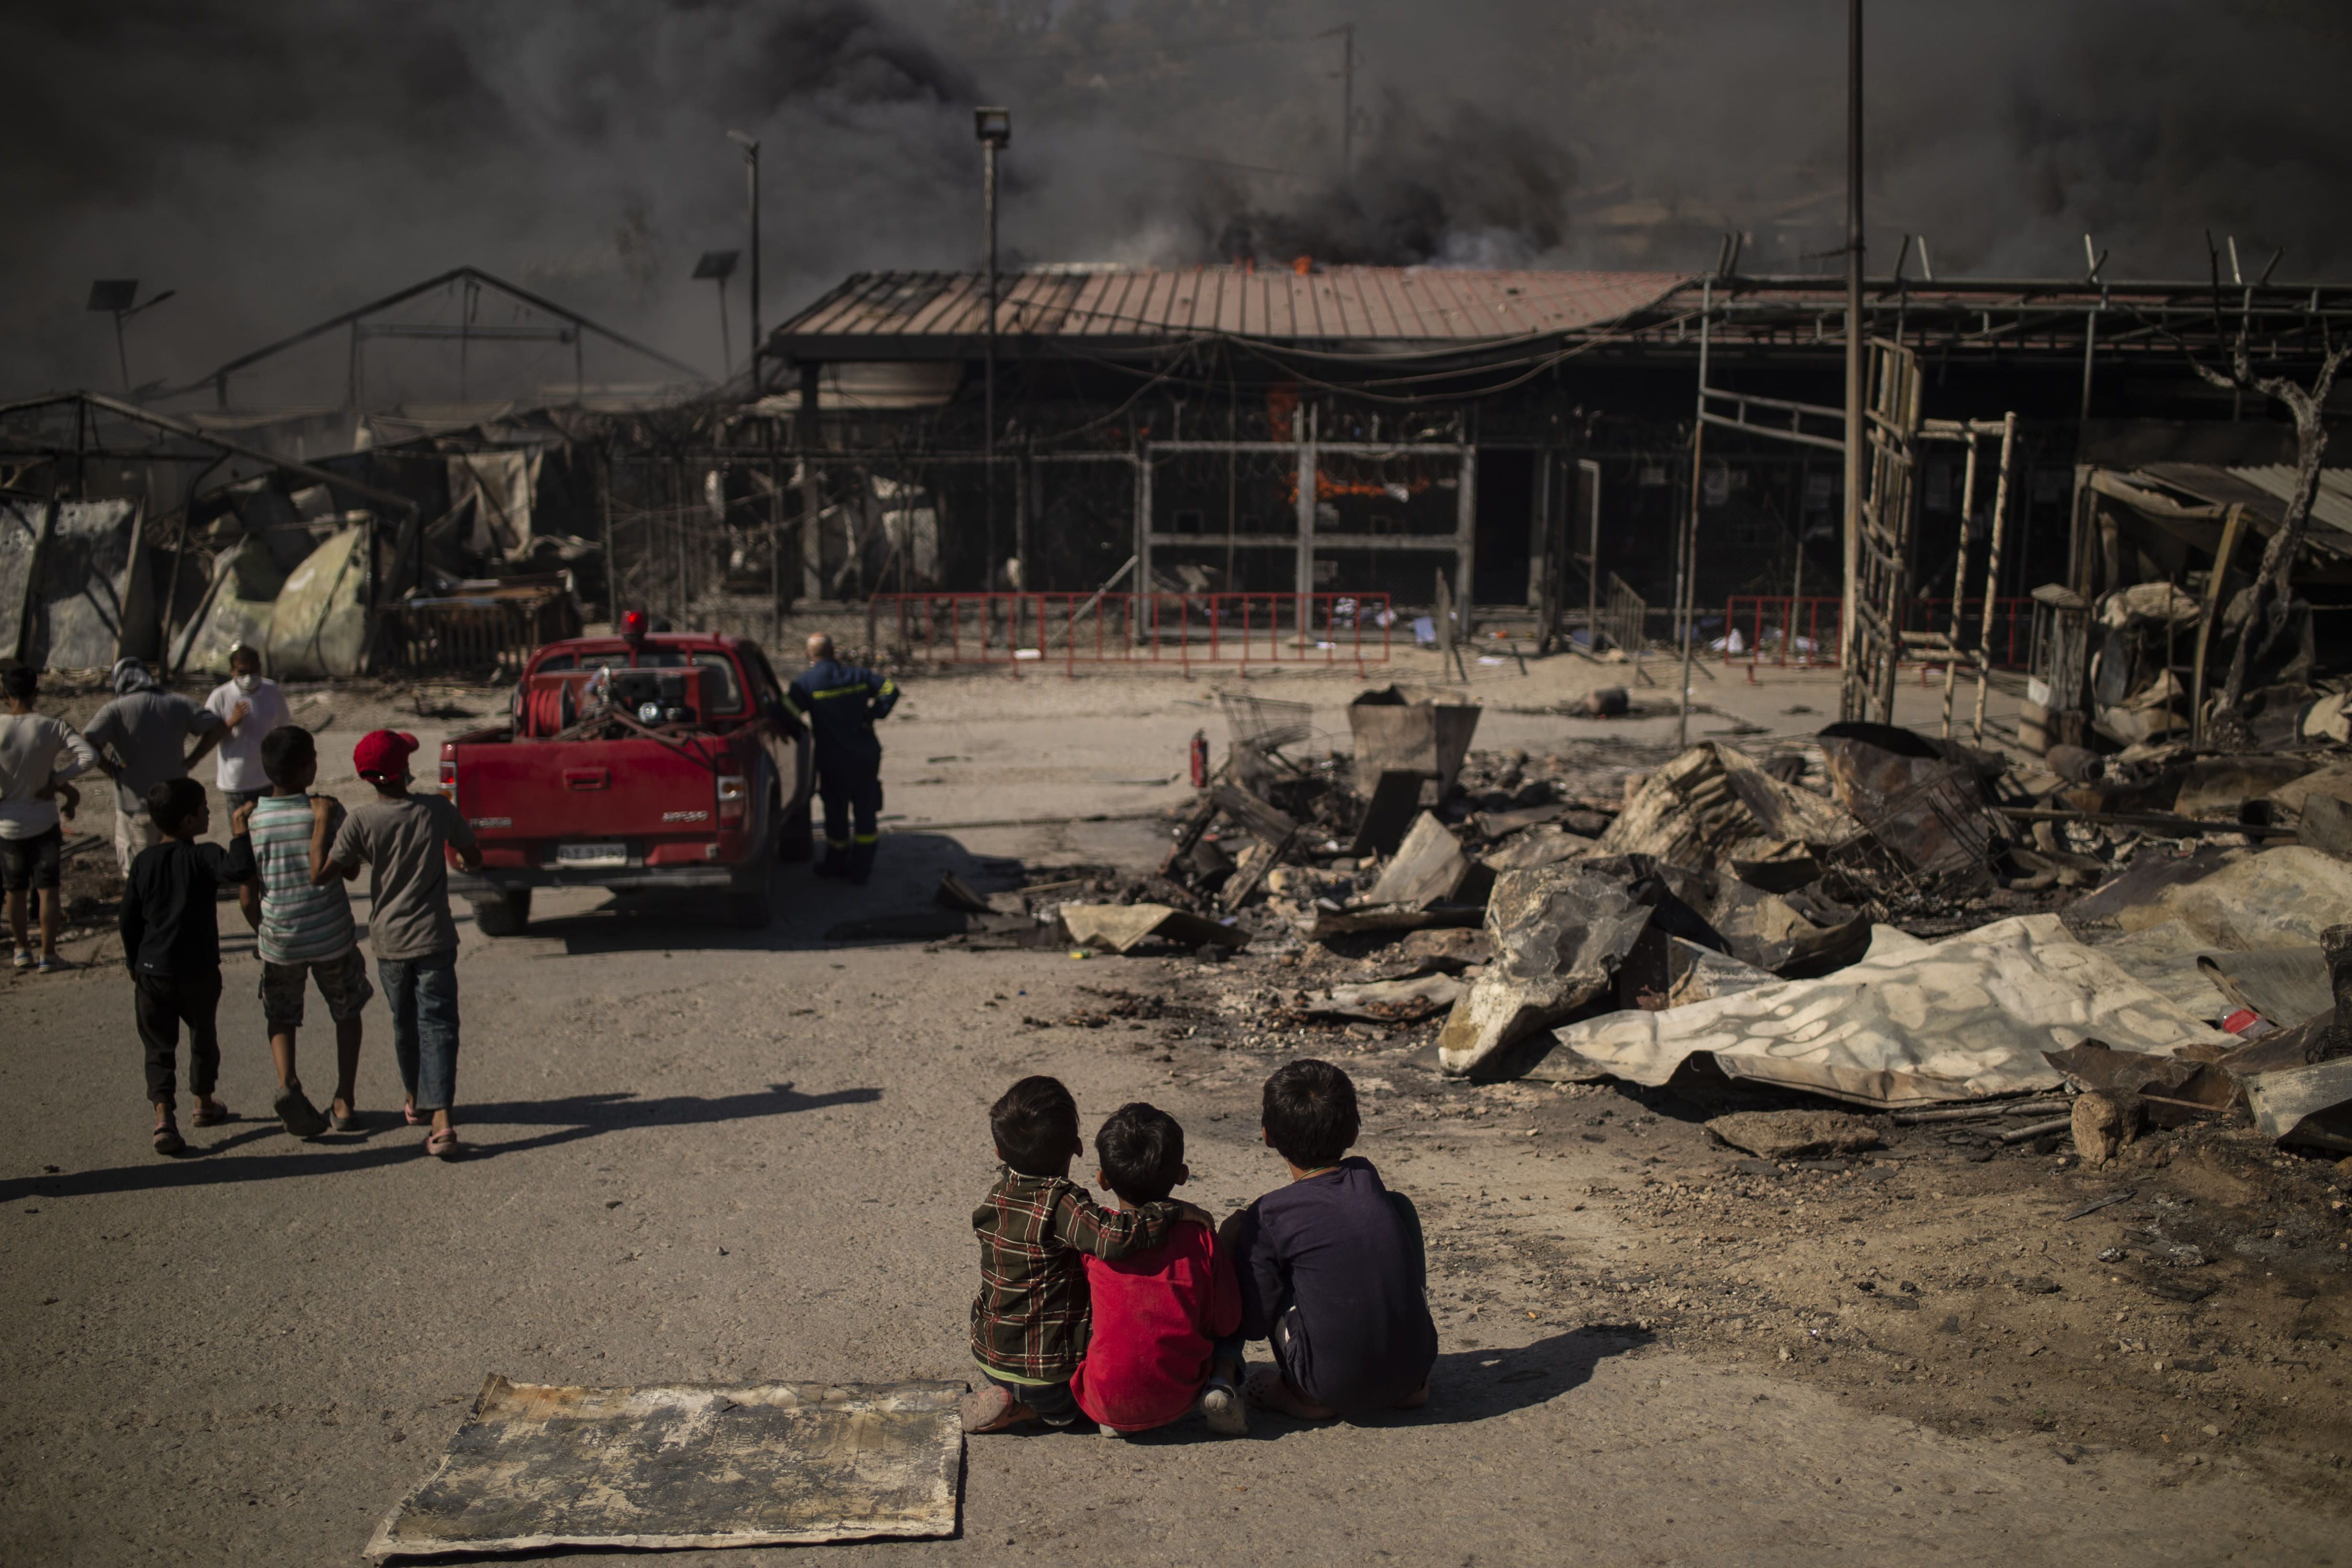 Ribuan Pengungsi Kembali ke Jalanan Setelah Kebakaran Kamp di Moria, Yunani